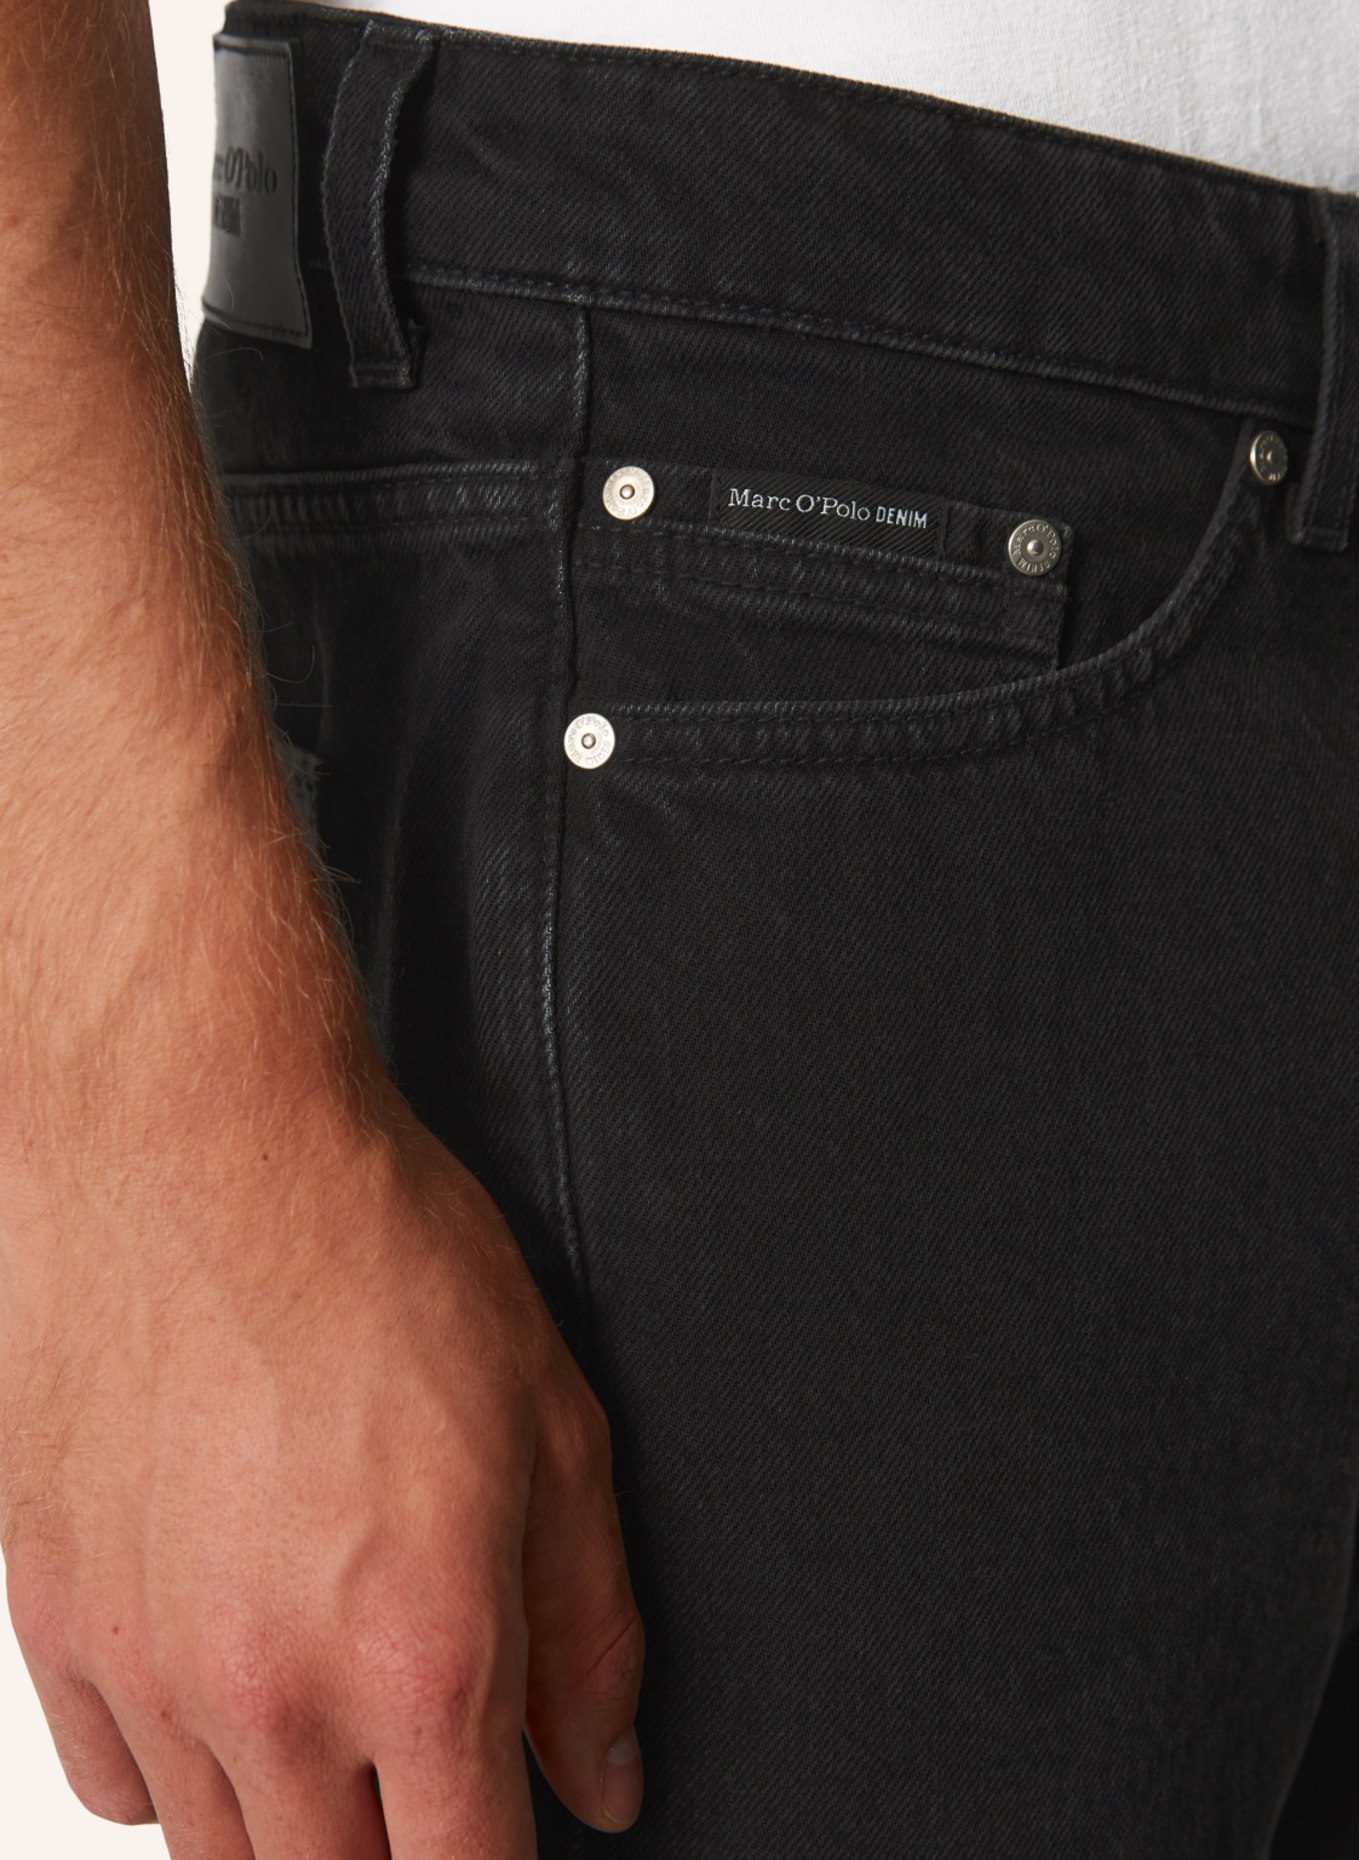 Marc O'Polo DENIM Jeans, Farbe: GRAU (Bild 3)